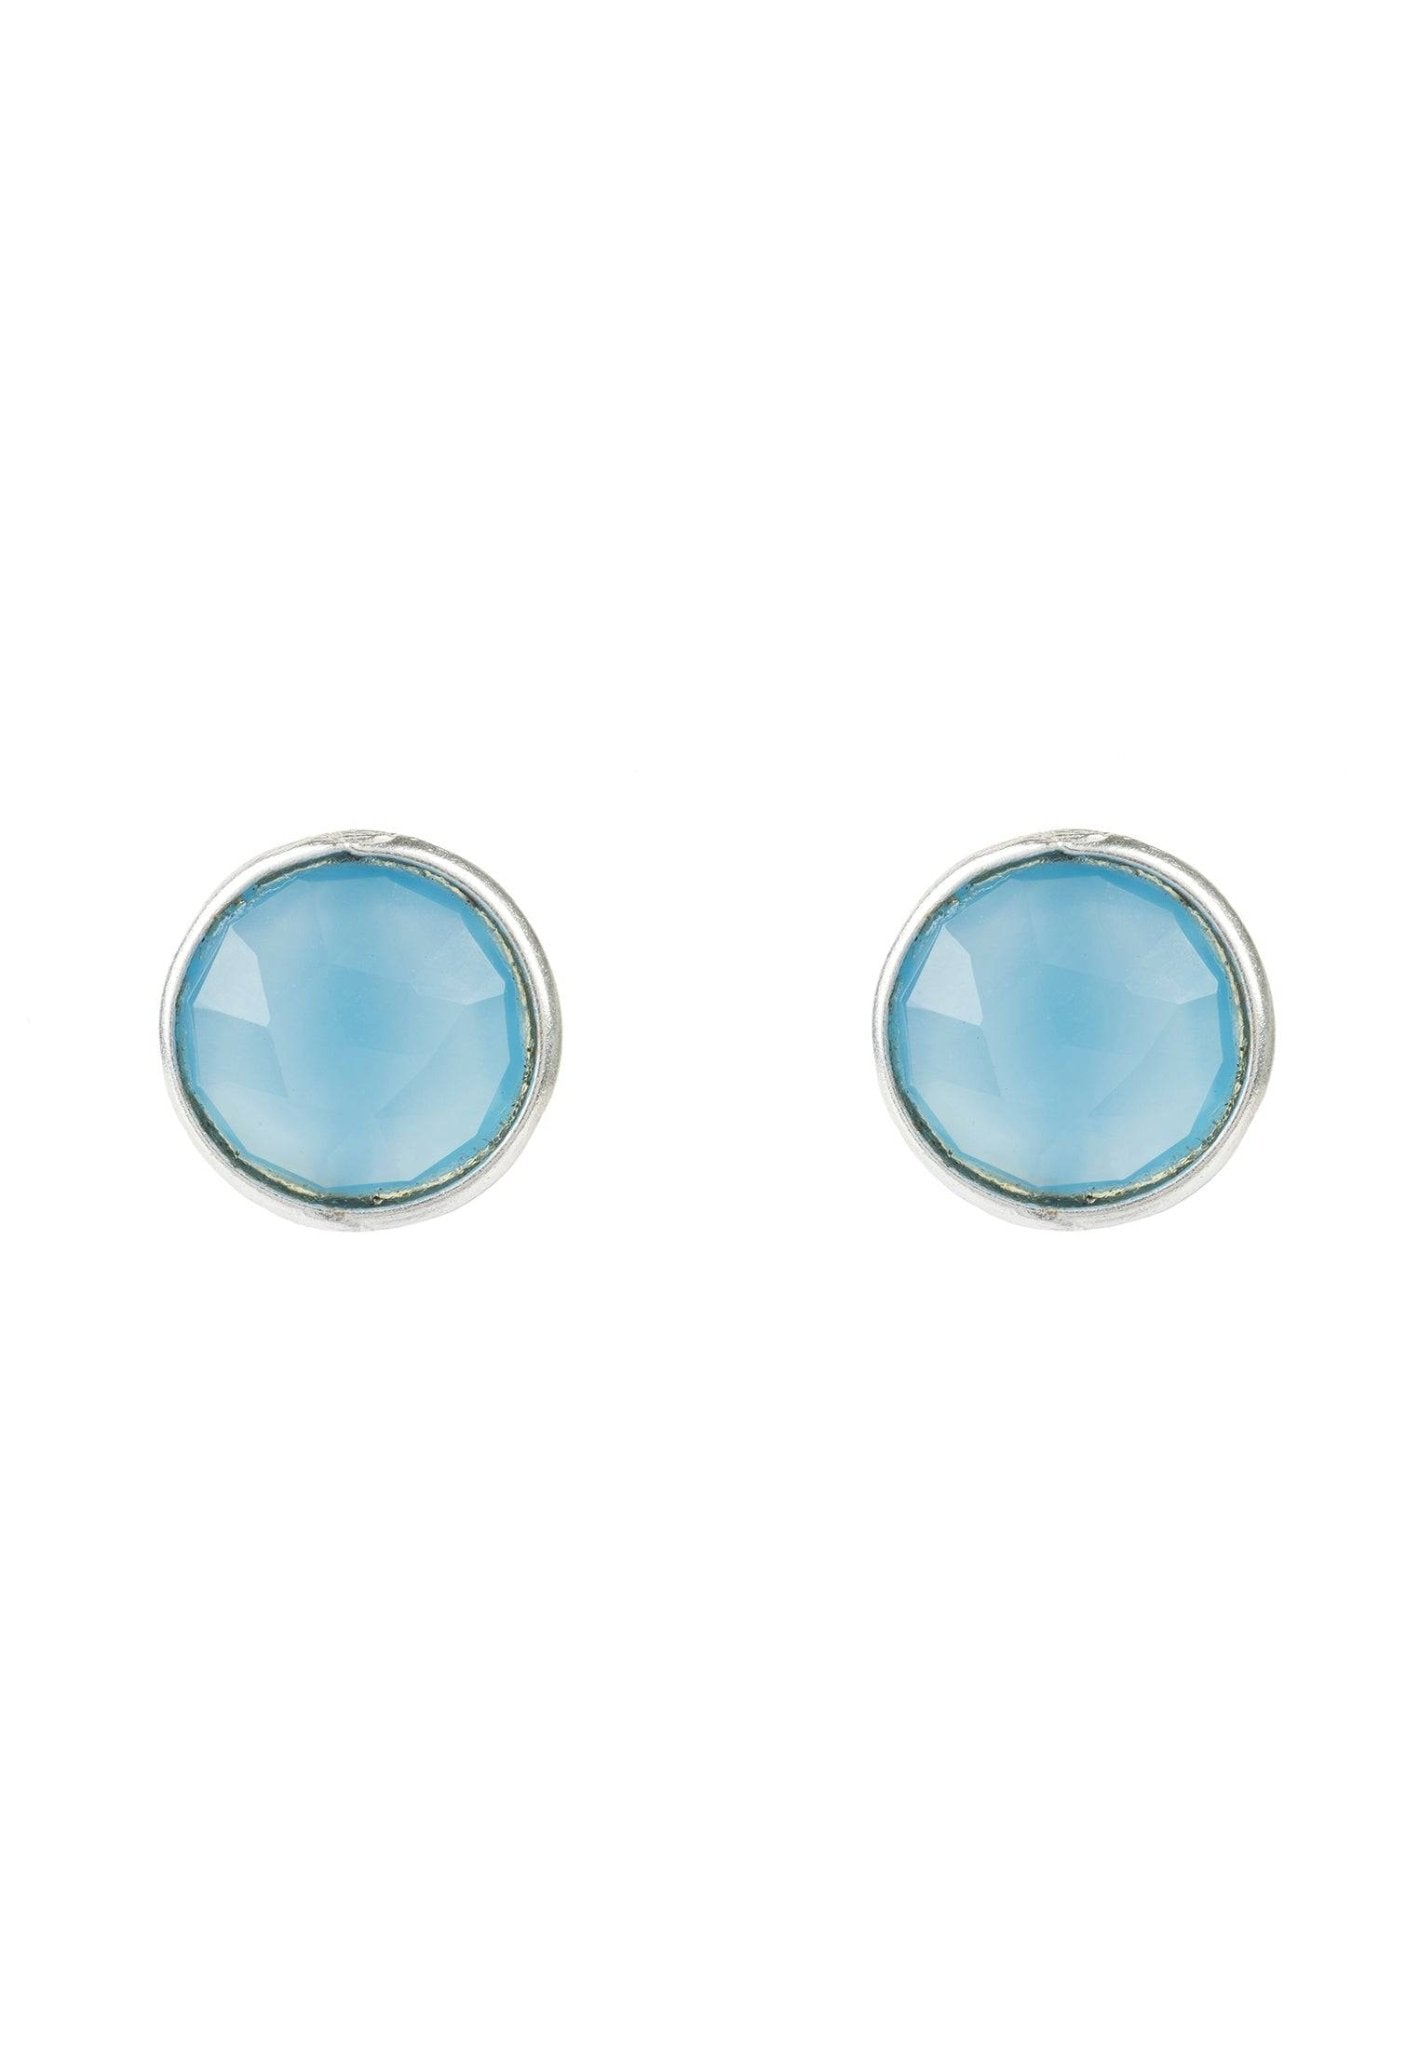 Medium Circle Gemstone Earrings Silver Blue Chalcedony - LATELITA Earrings